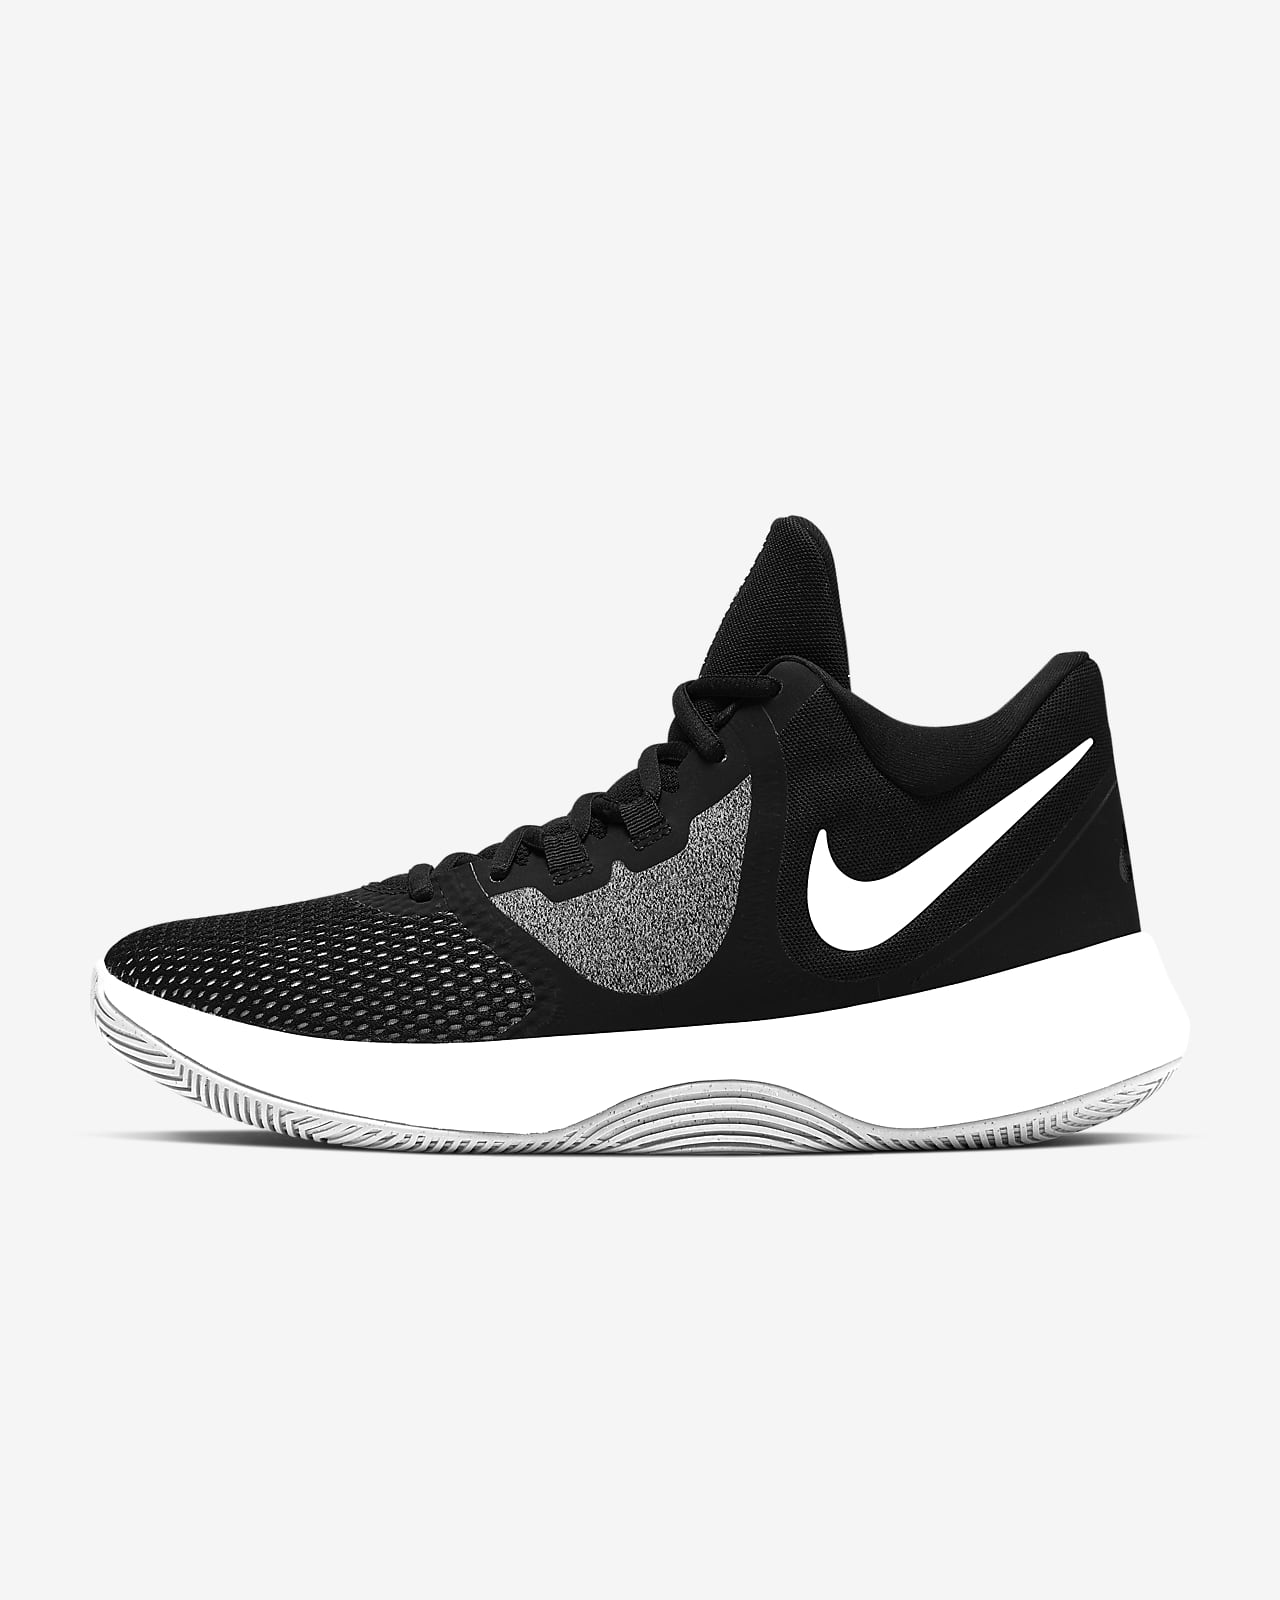 Nike Air Precision II Basketball Shoe 